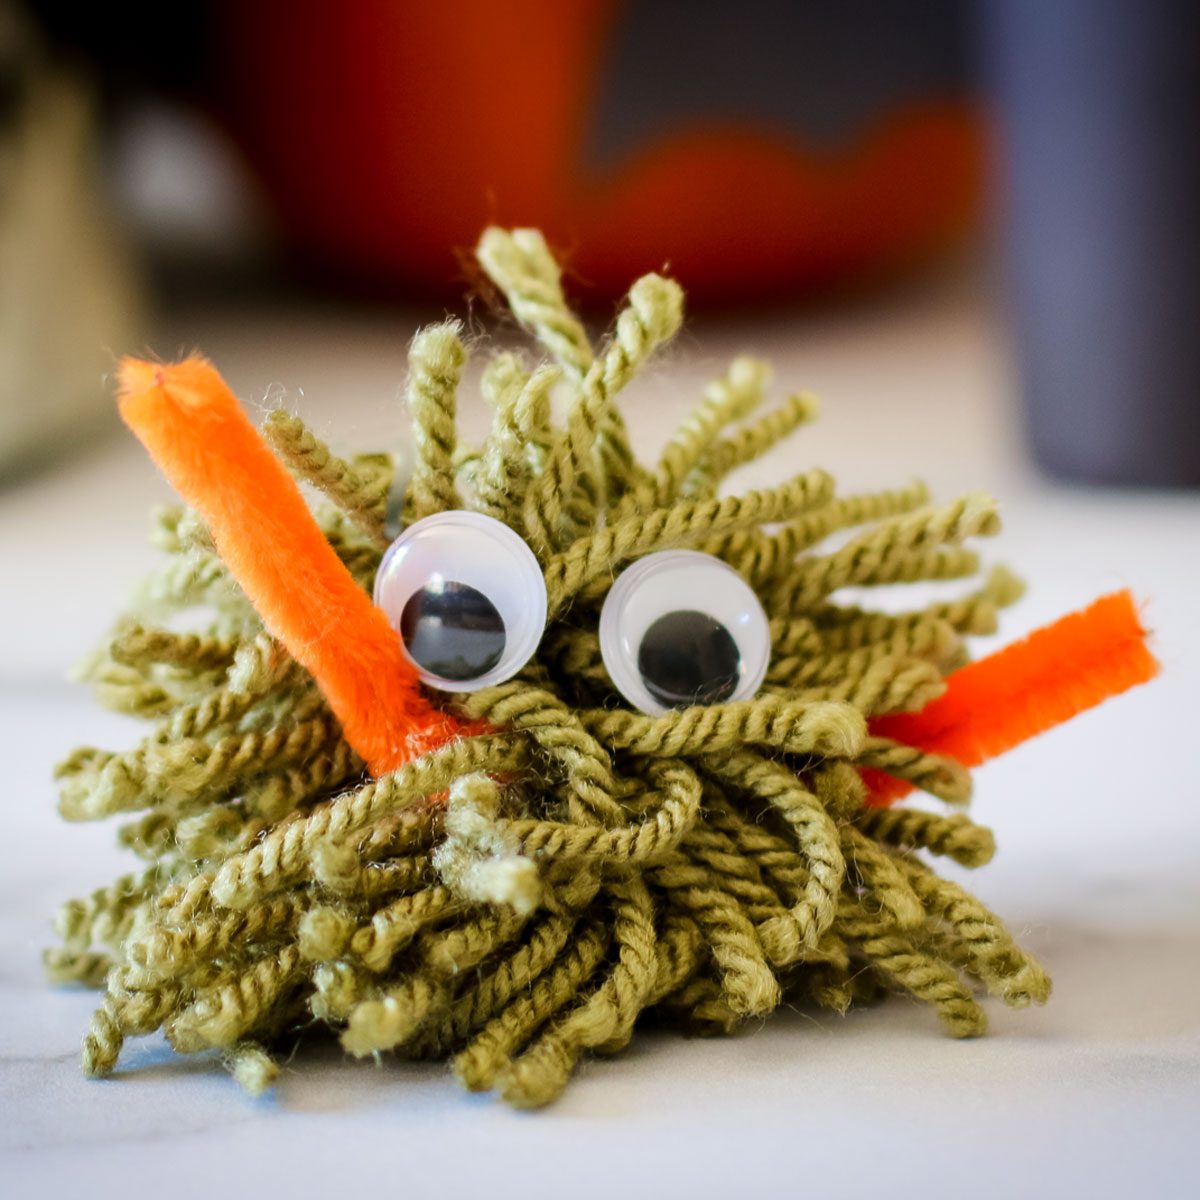 Yarn Monster craft madewith green yard and googly eyes